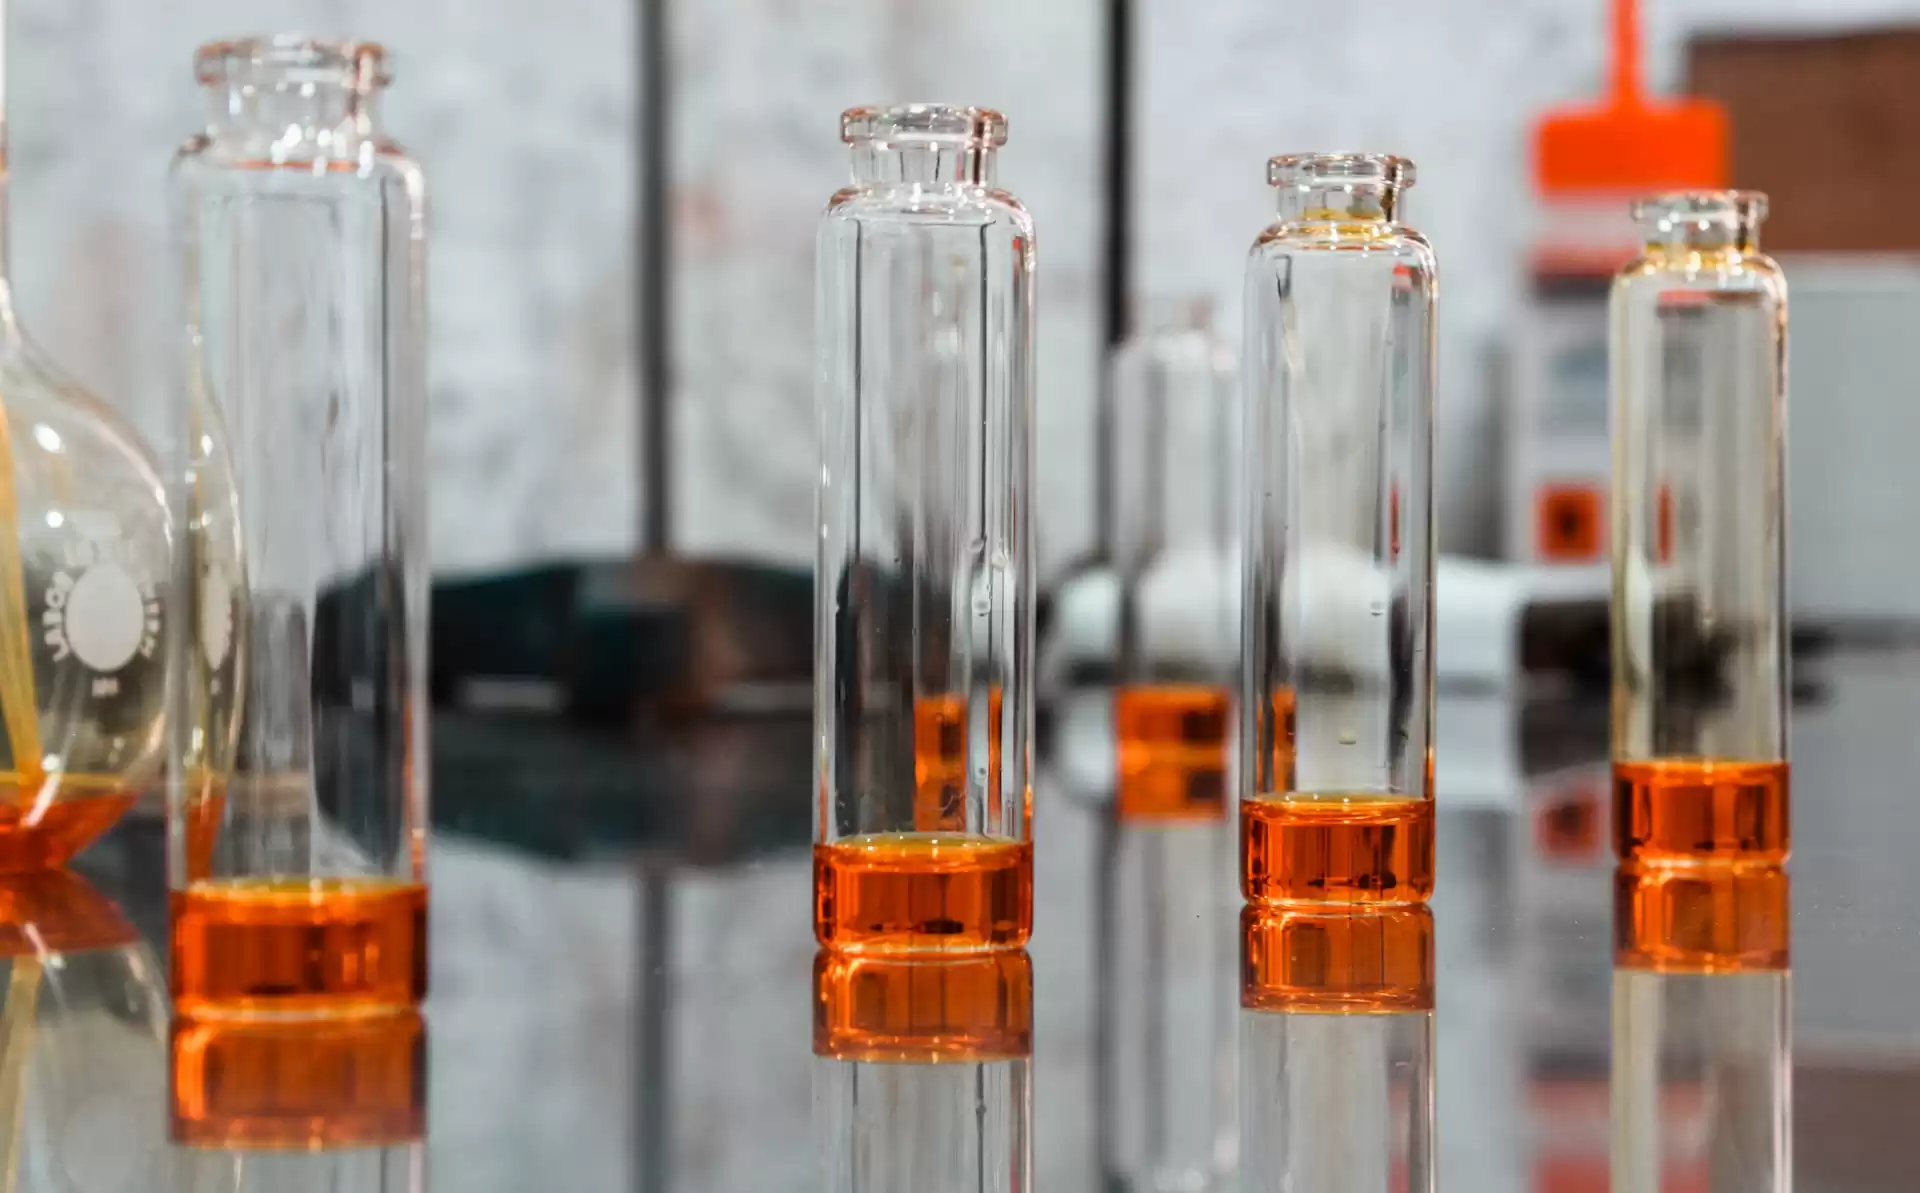 Assorted glass vials